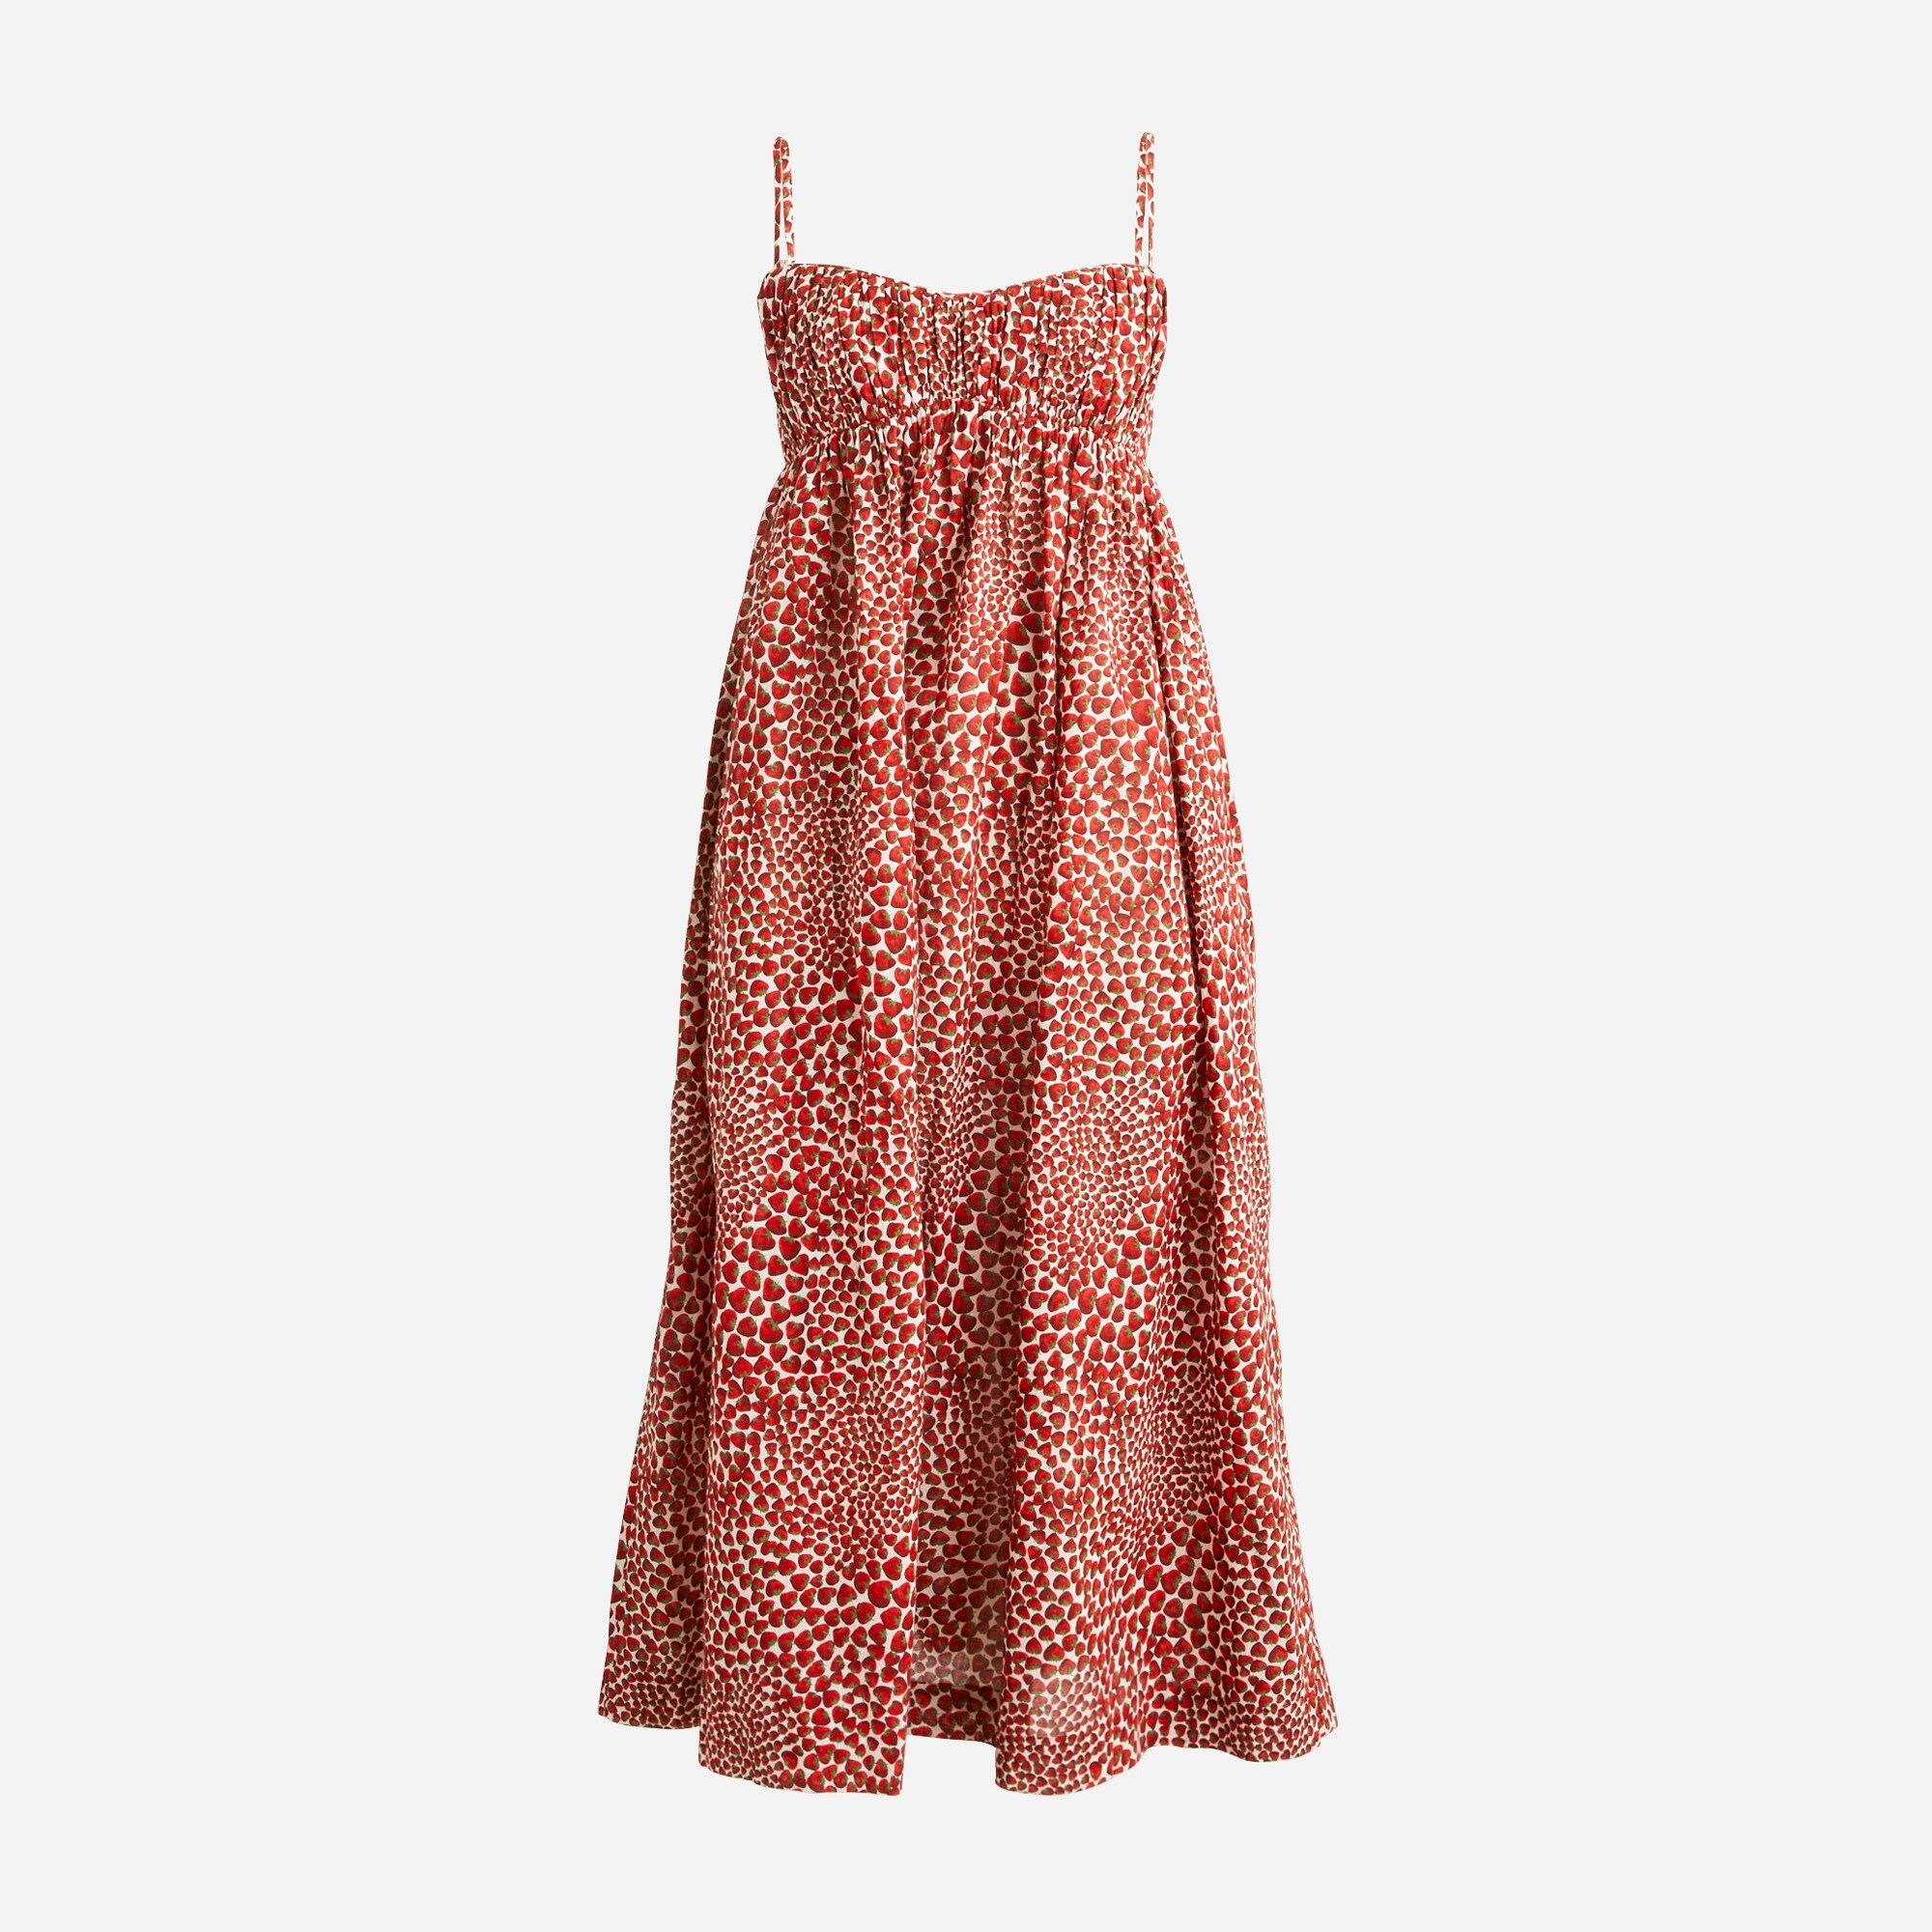  Empire-waist midi dress in strawberry swirl print